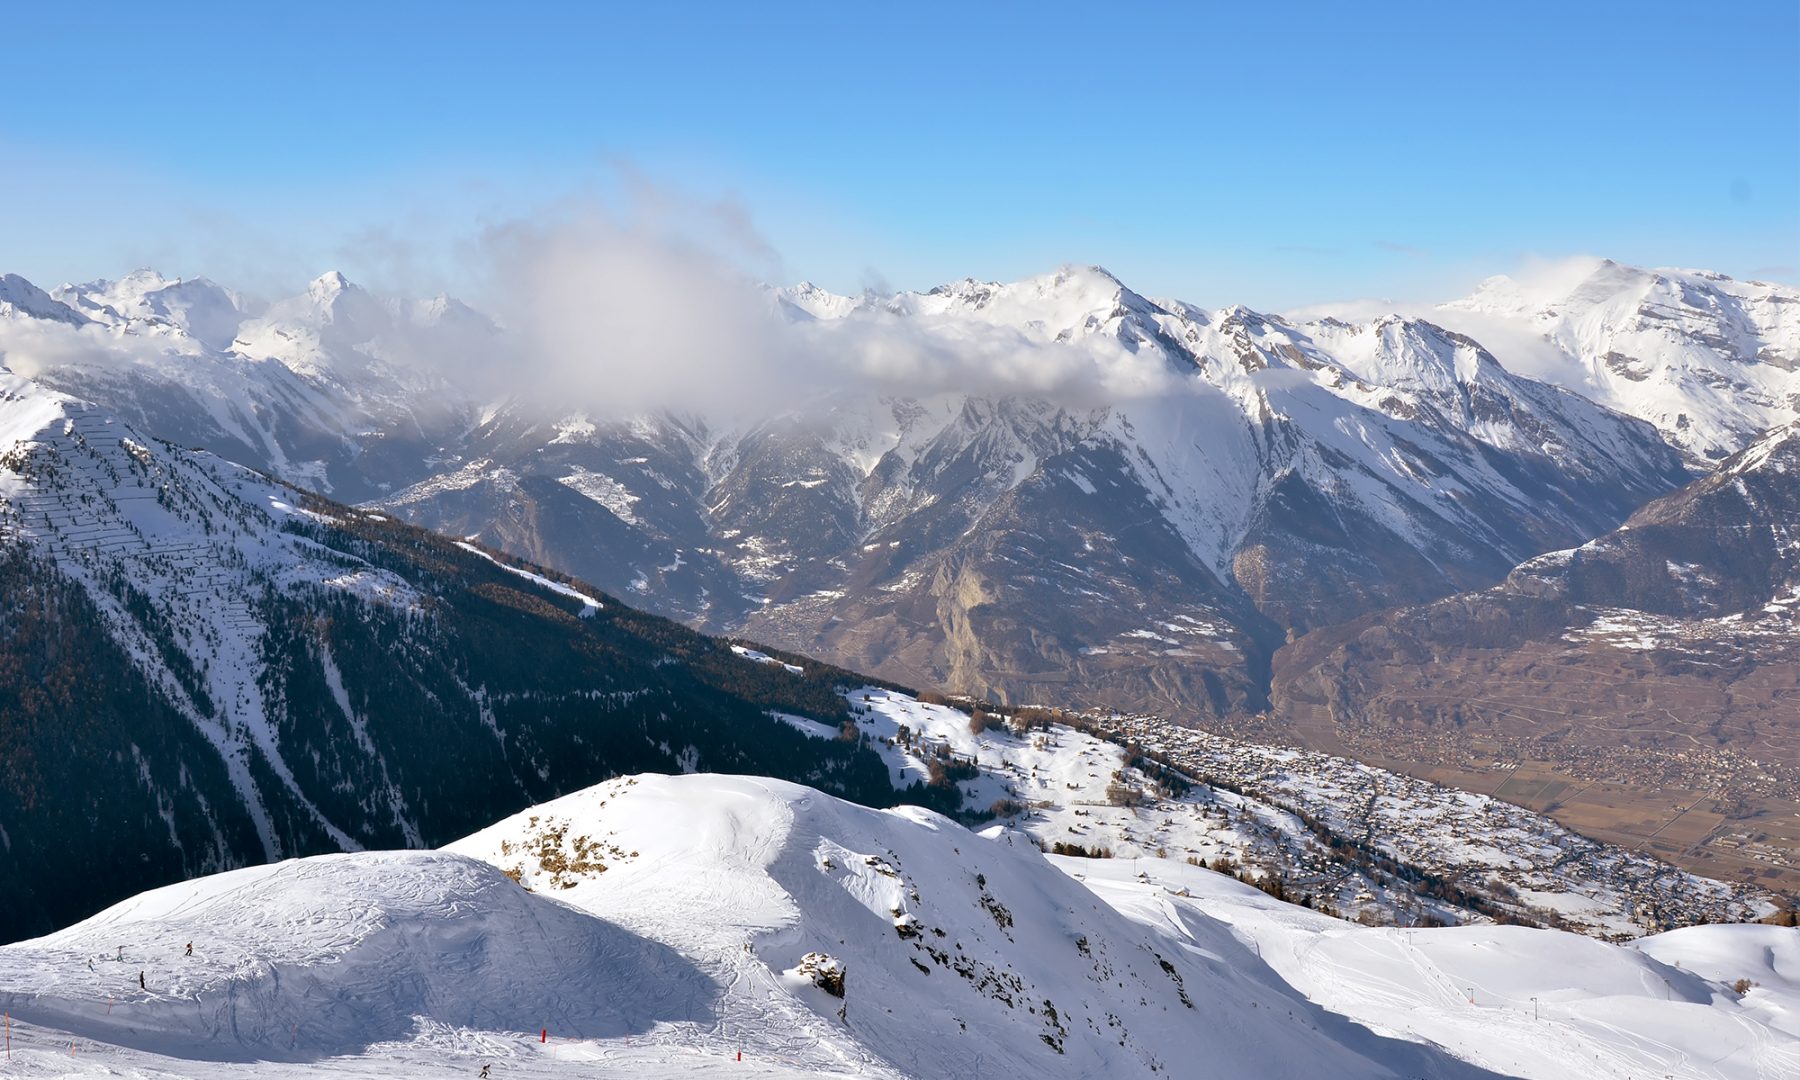 Les 4 Vallées in Switzerland occupies number 3 in the ranking of My Voucher Codes. My Voucher Codes ranking of the Best European Ski Resorts 2018.